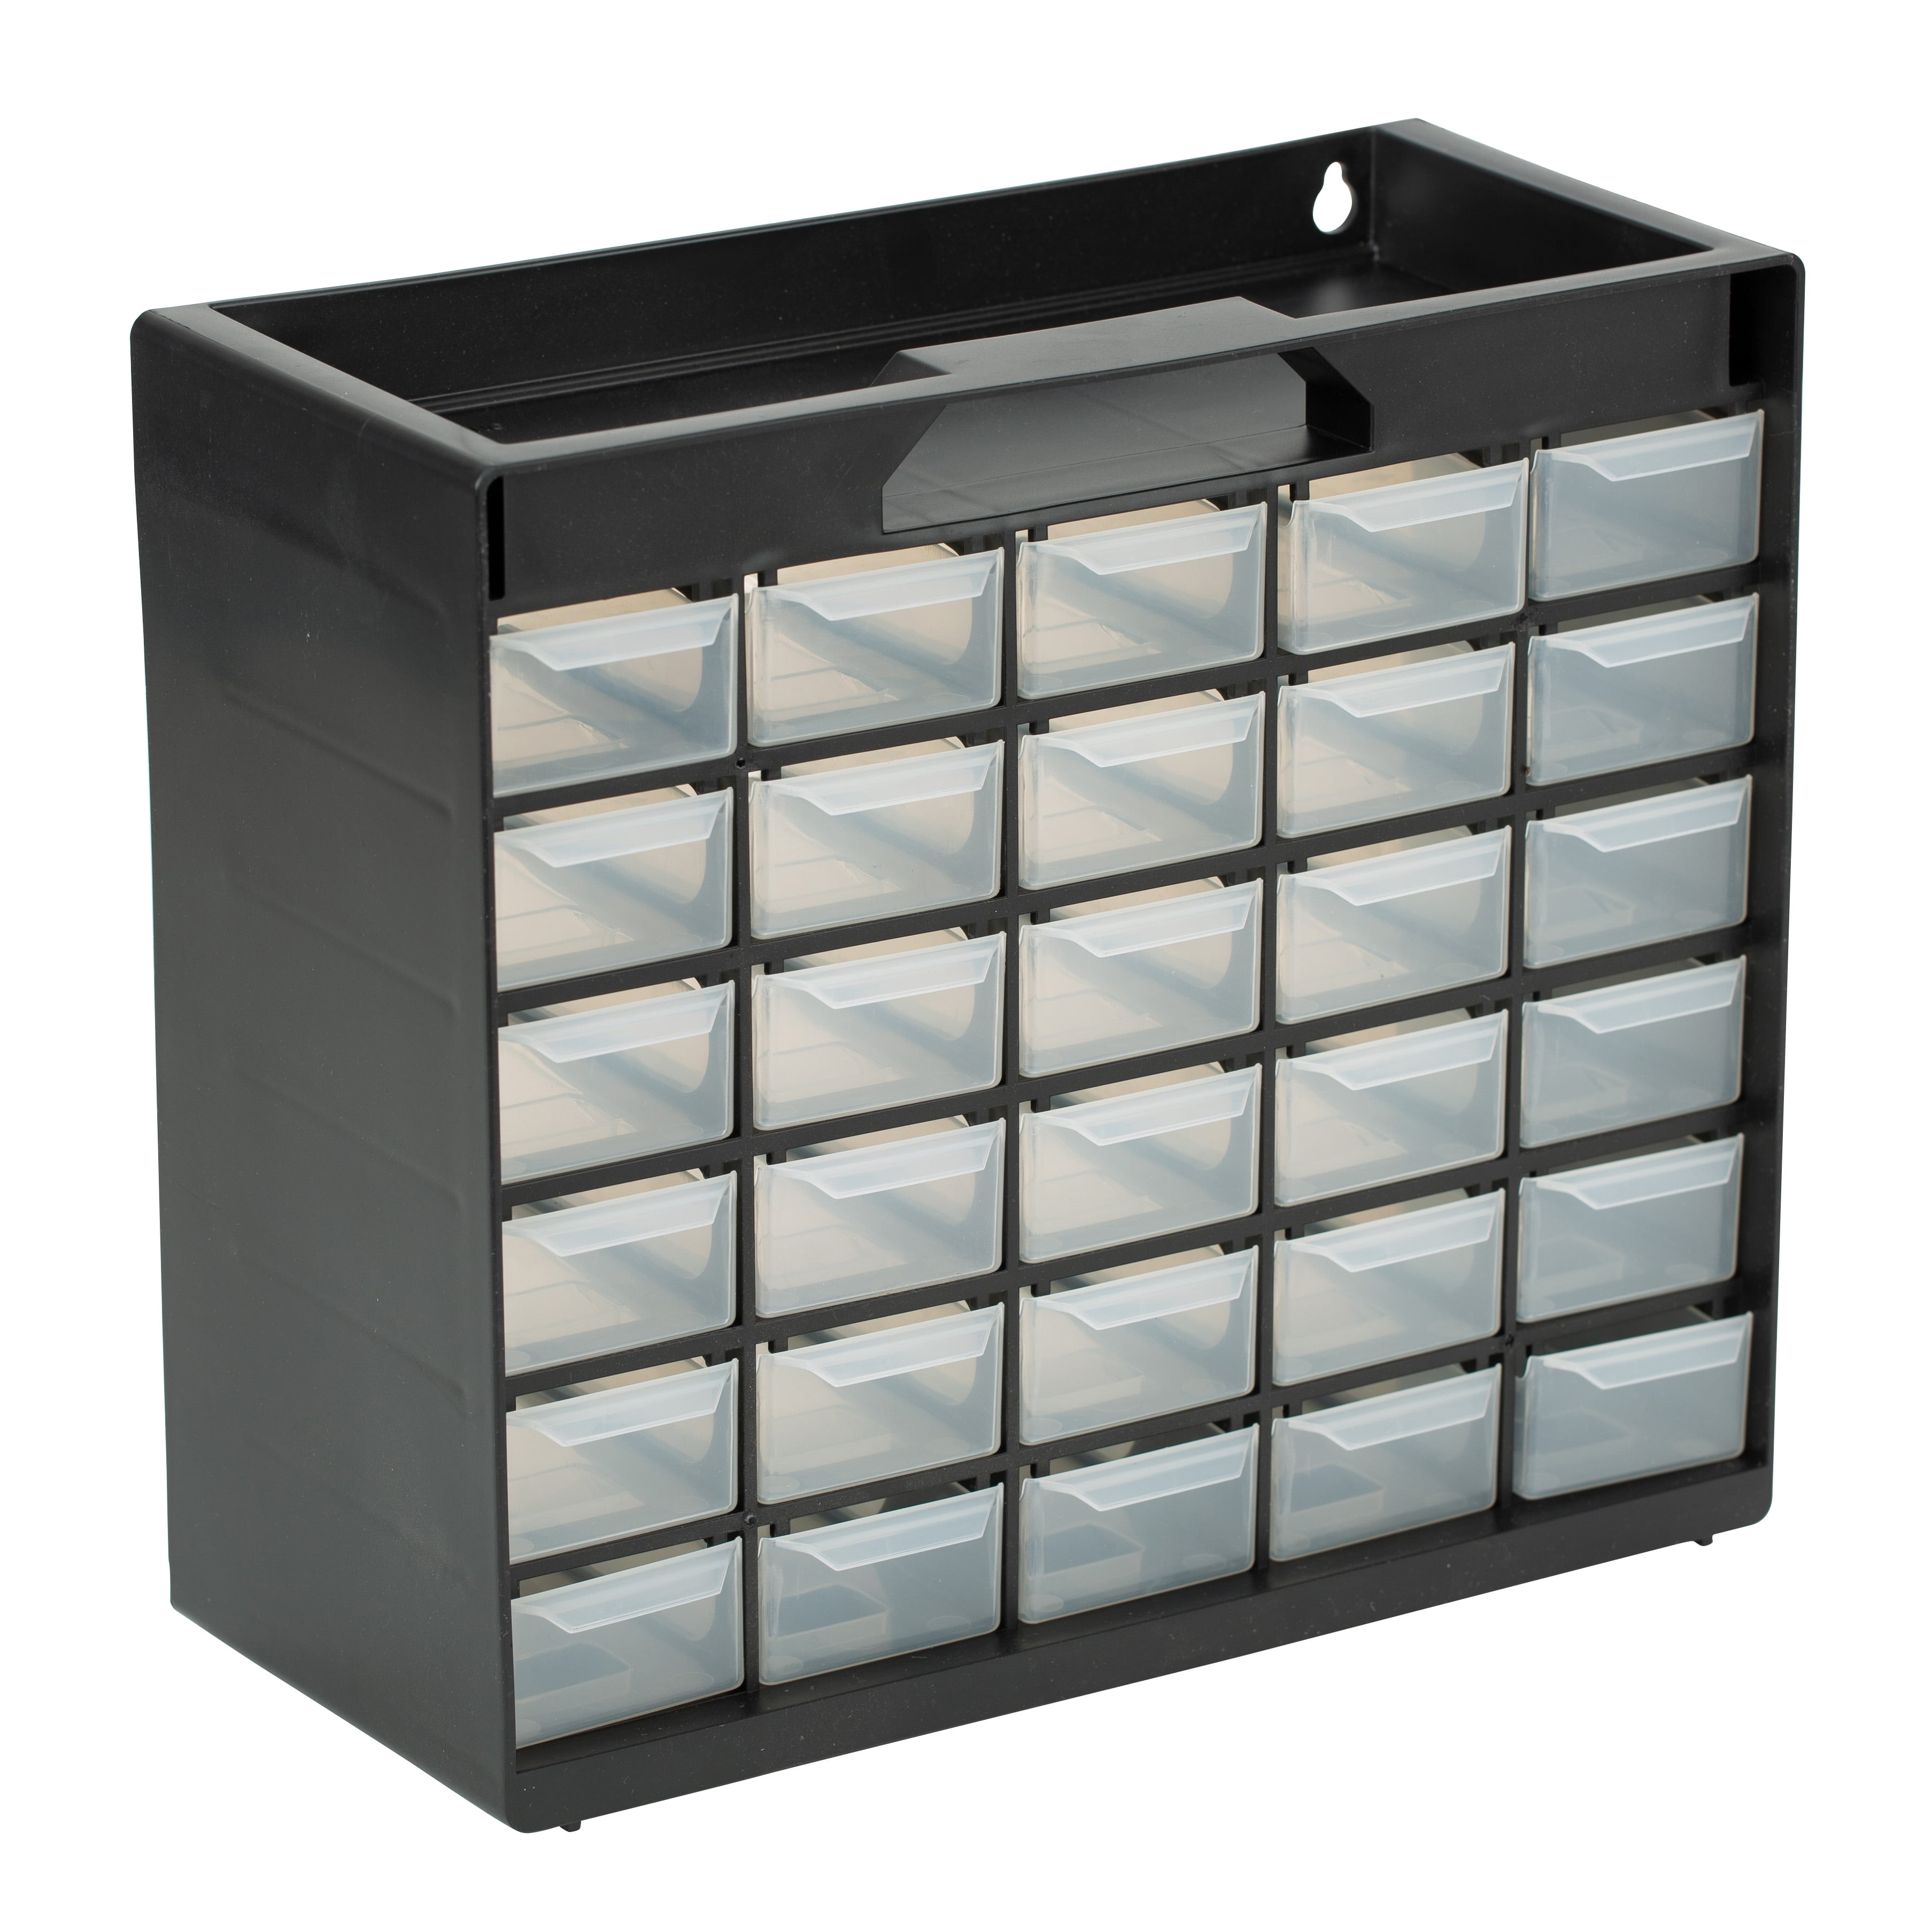 New 1PC Plastic Drawer Cabinet Storage Organizer Hardware  Parts Craft Tool Box